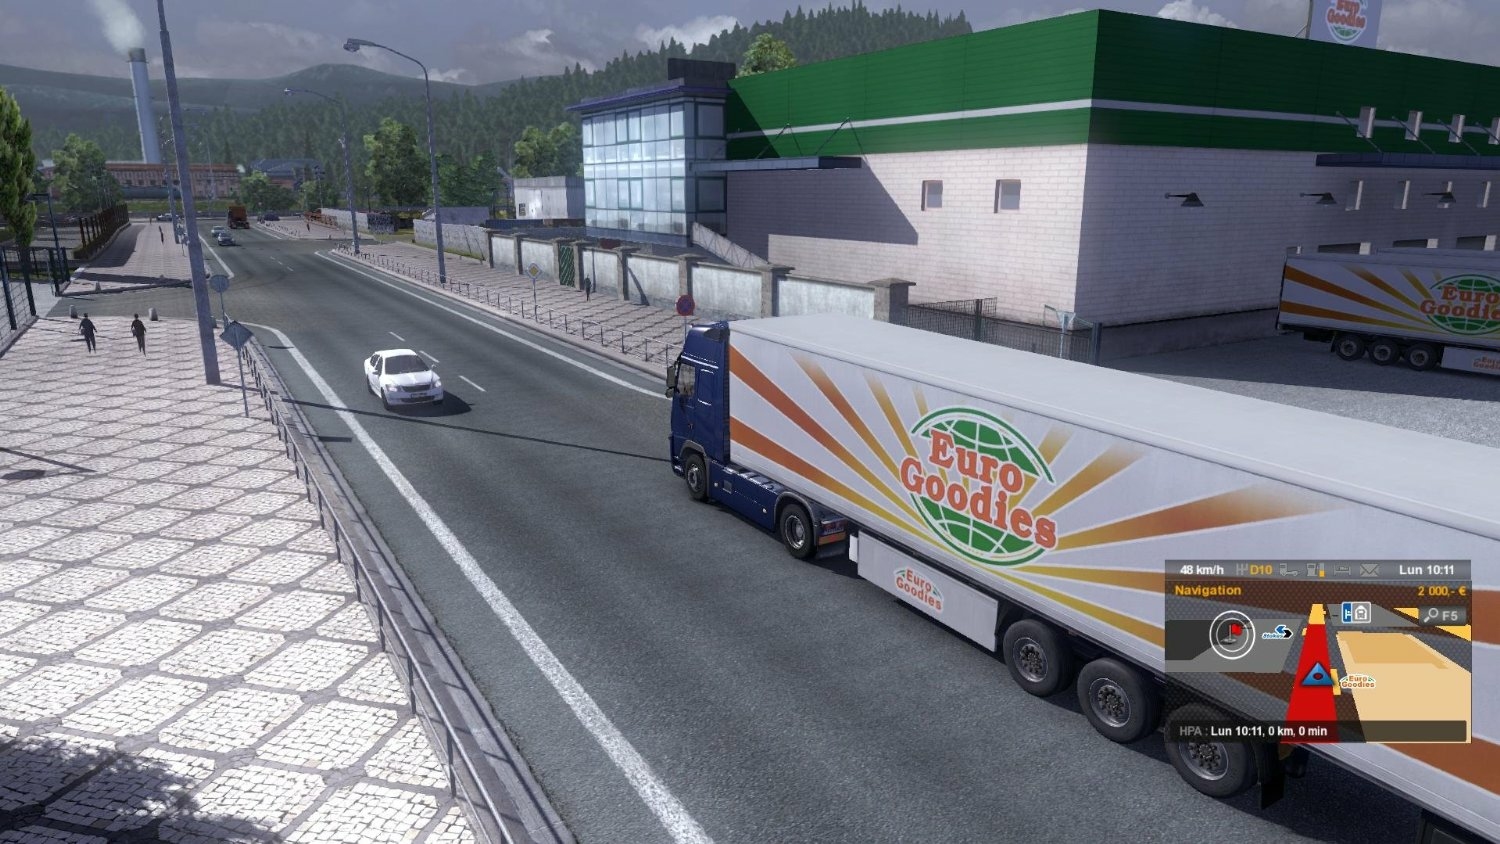 euro truck simulator 2 gold edition free download